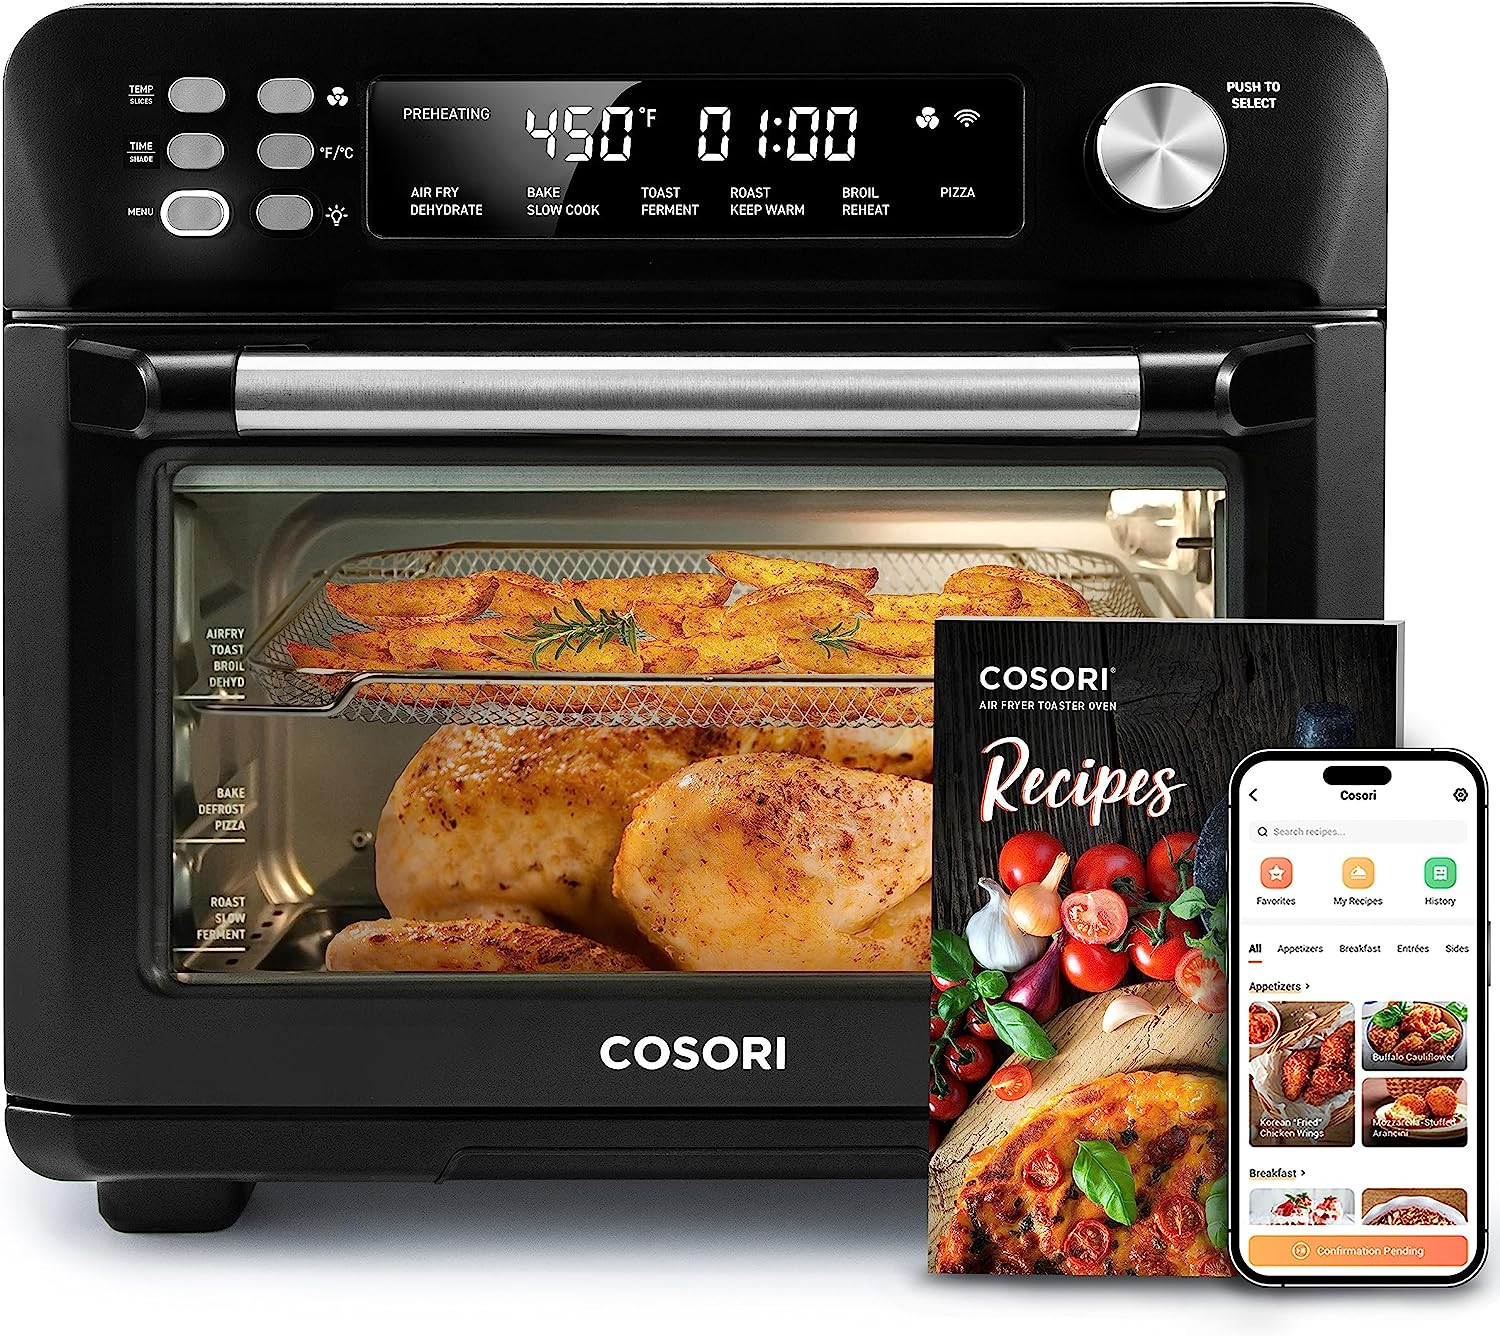 COSORI Convection Countertop Toaster Oven